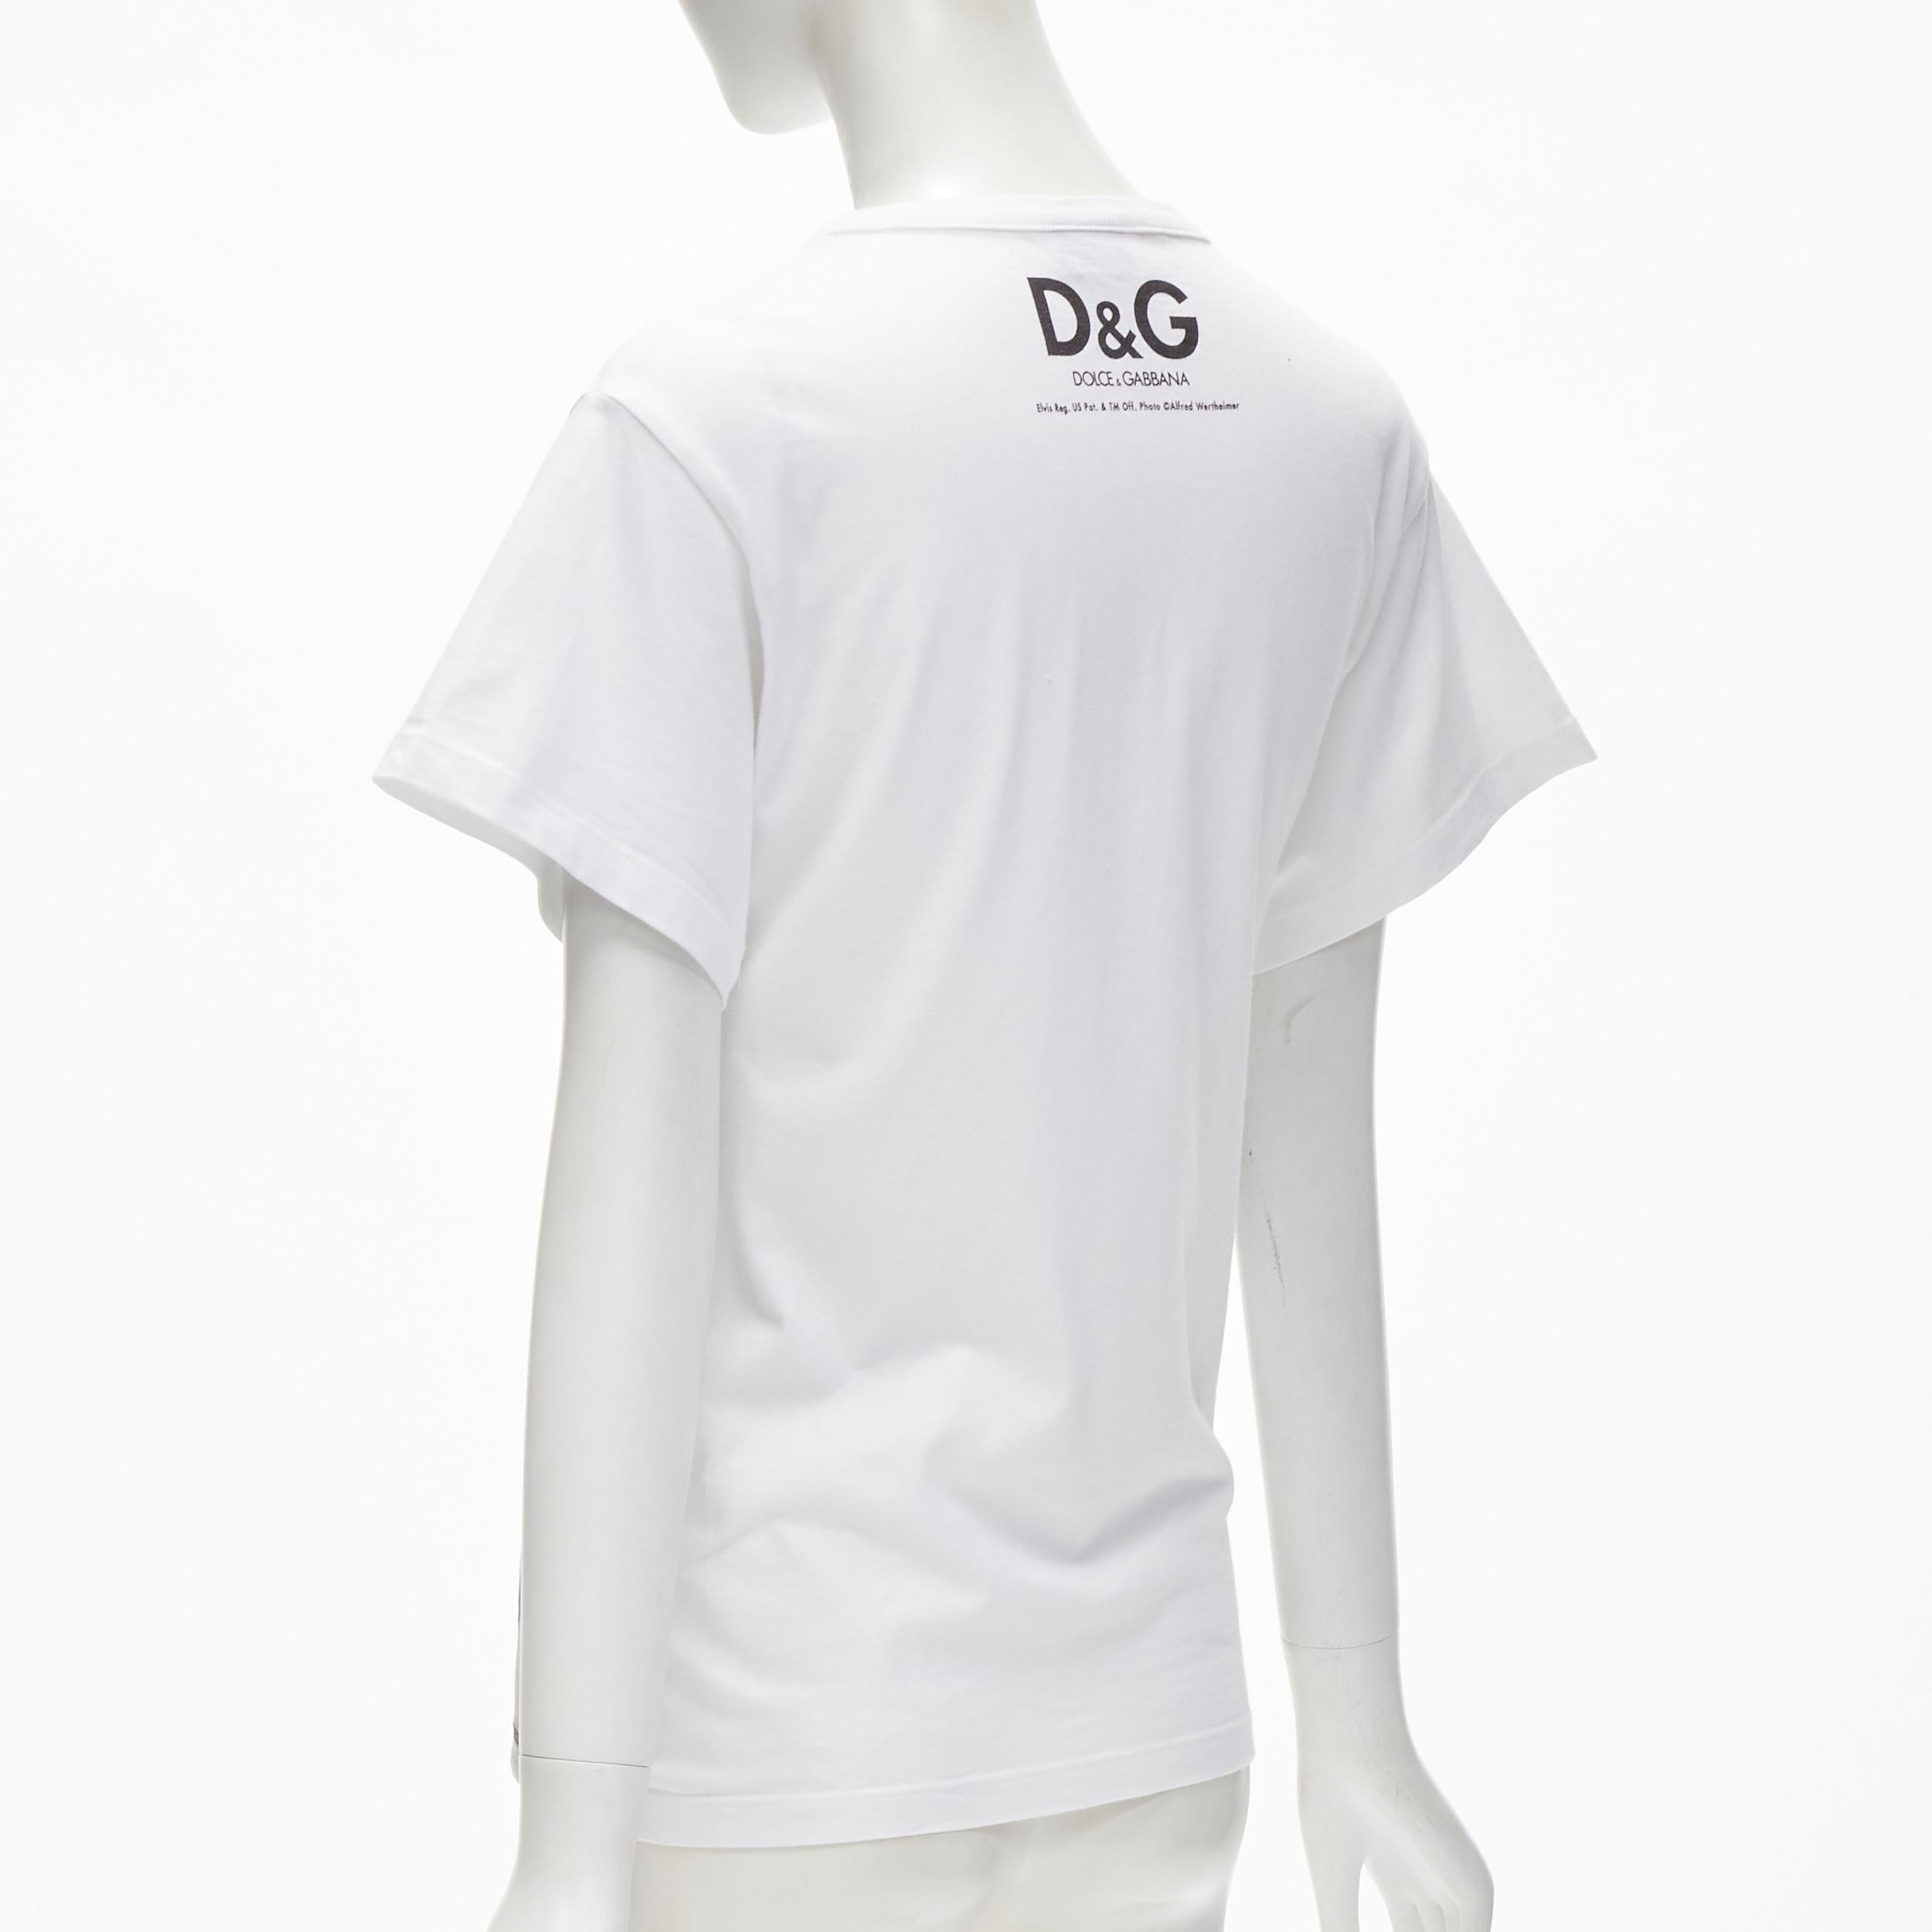 D&G DOLCE GABBANA Elvis Presley Y2K photo print white tshirt S 2